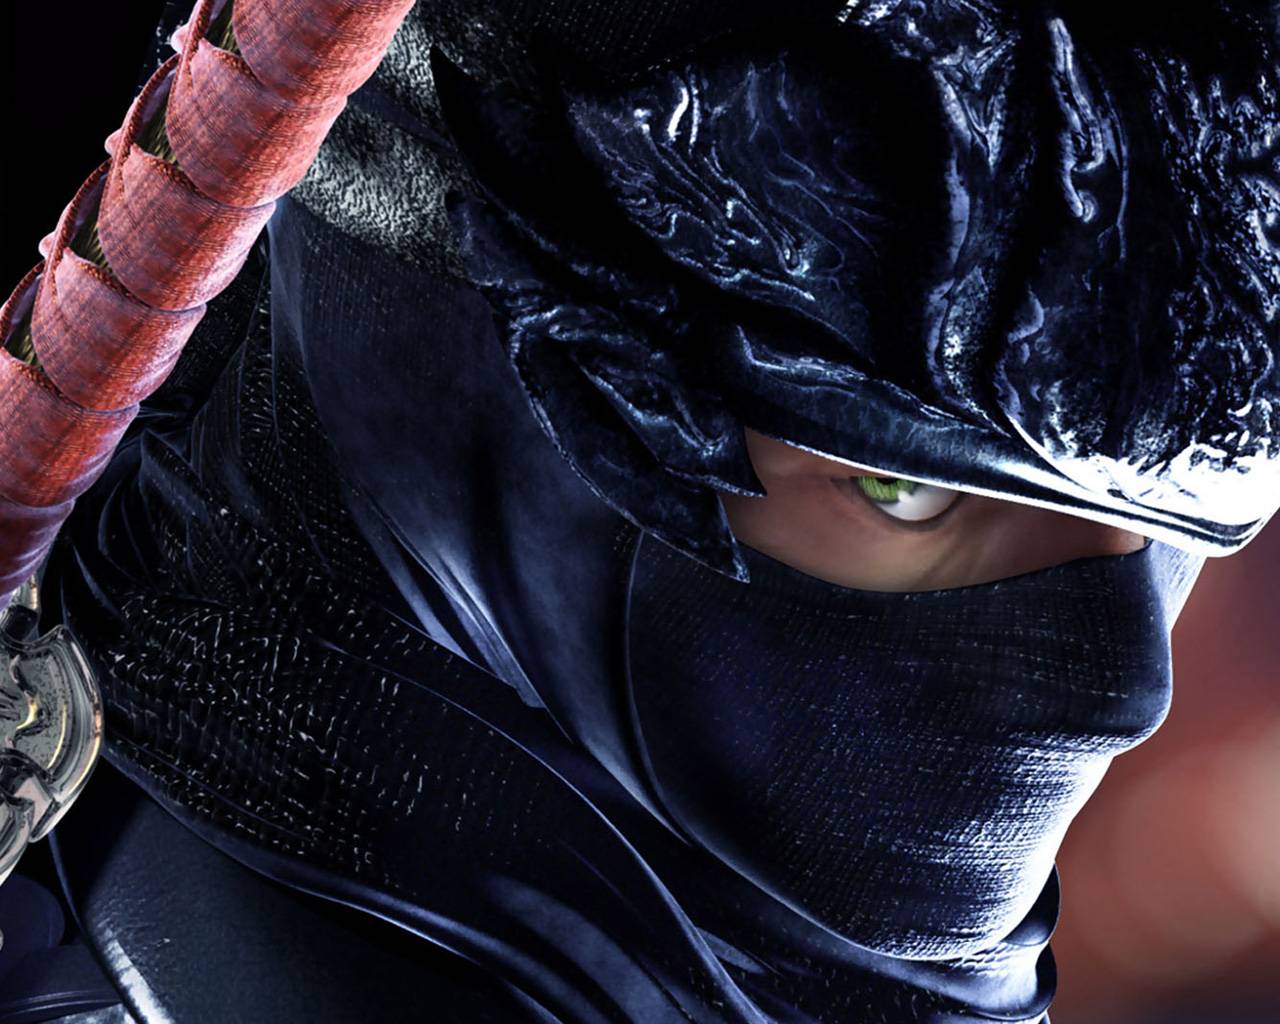 Ninja Gaiden 3 Wallpaper in HD